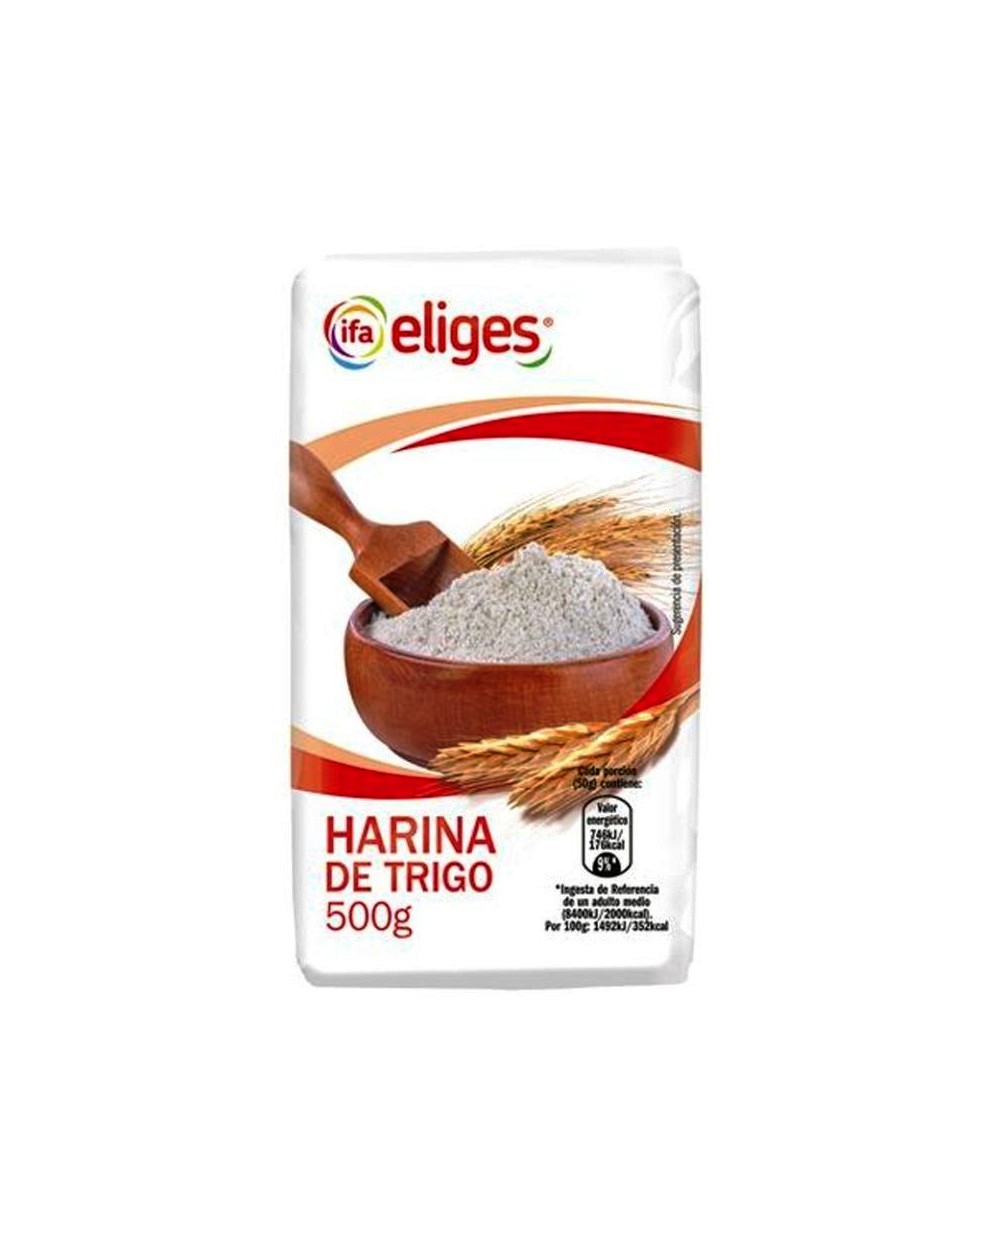 HARINA TRIGO IFA ELIGES 500g.